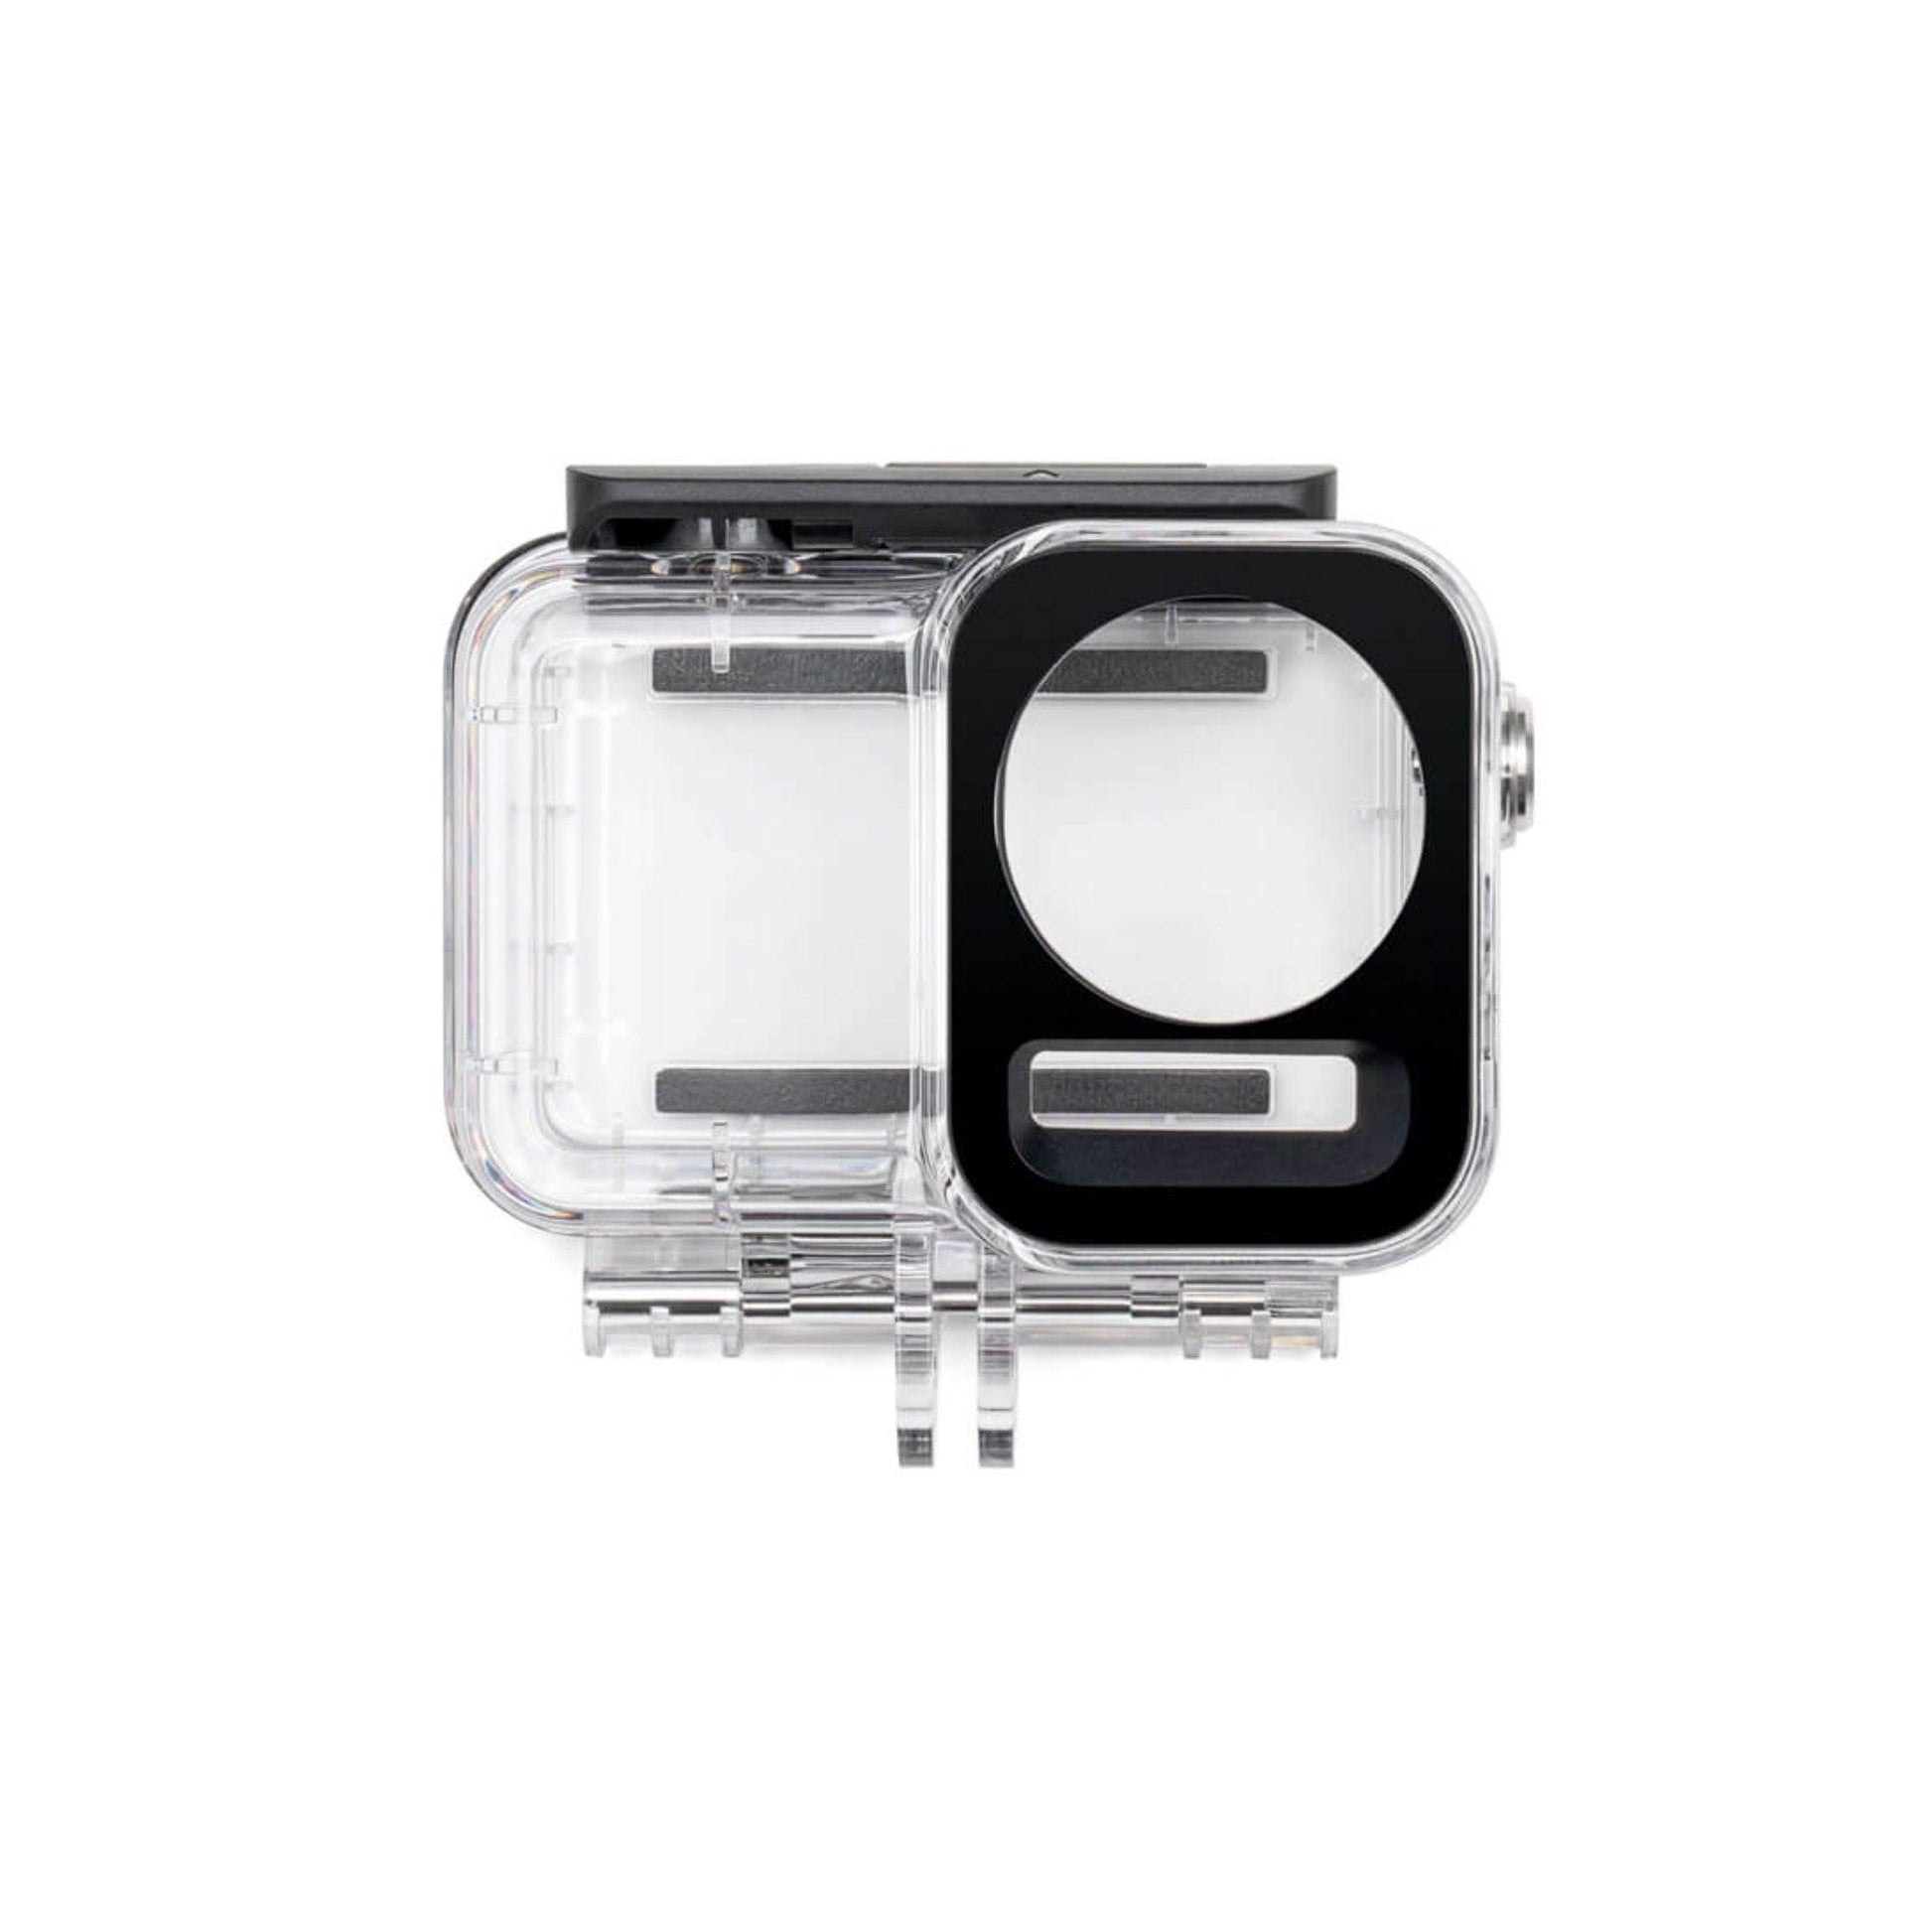 Osmo Action 60m Waterproof Case - Silverlight Optics